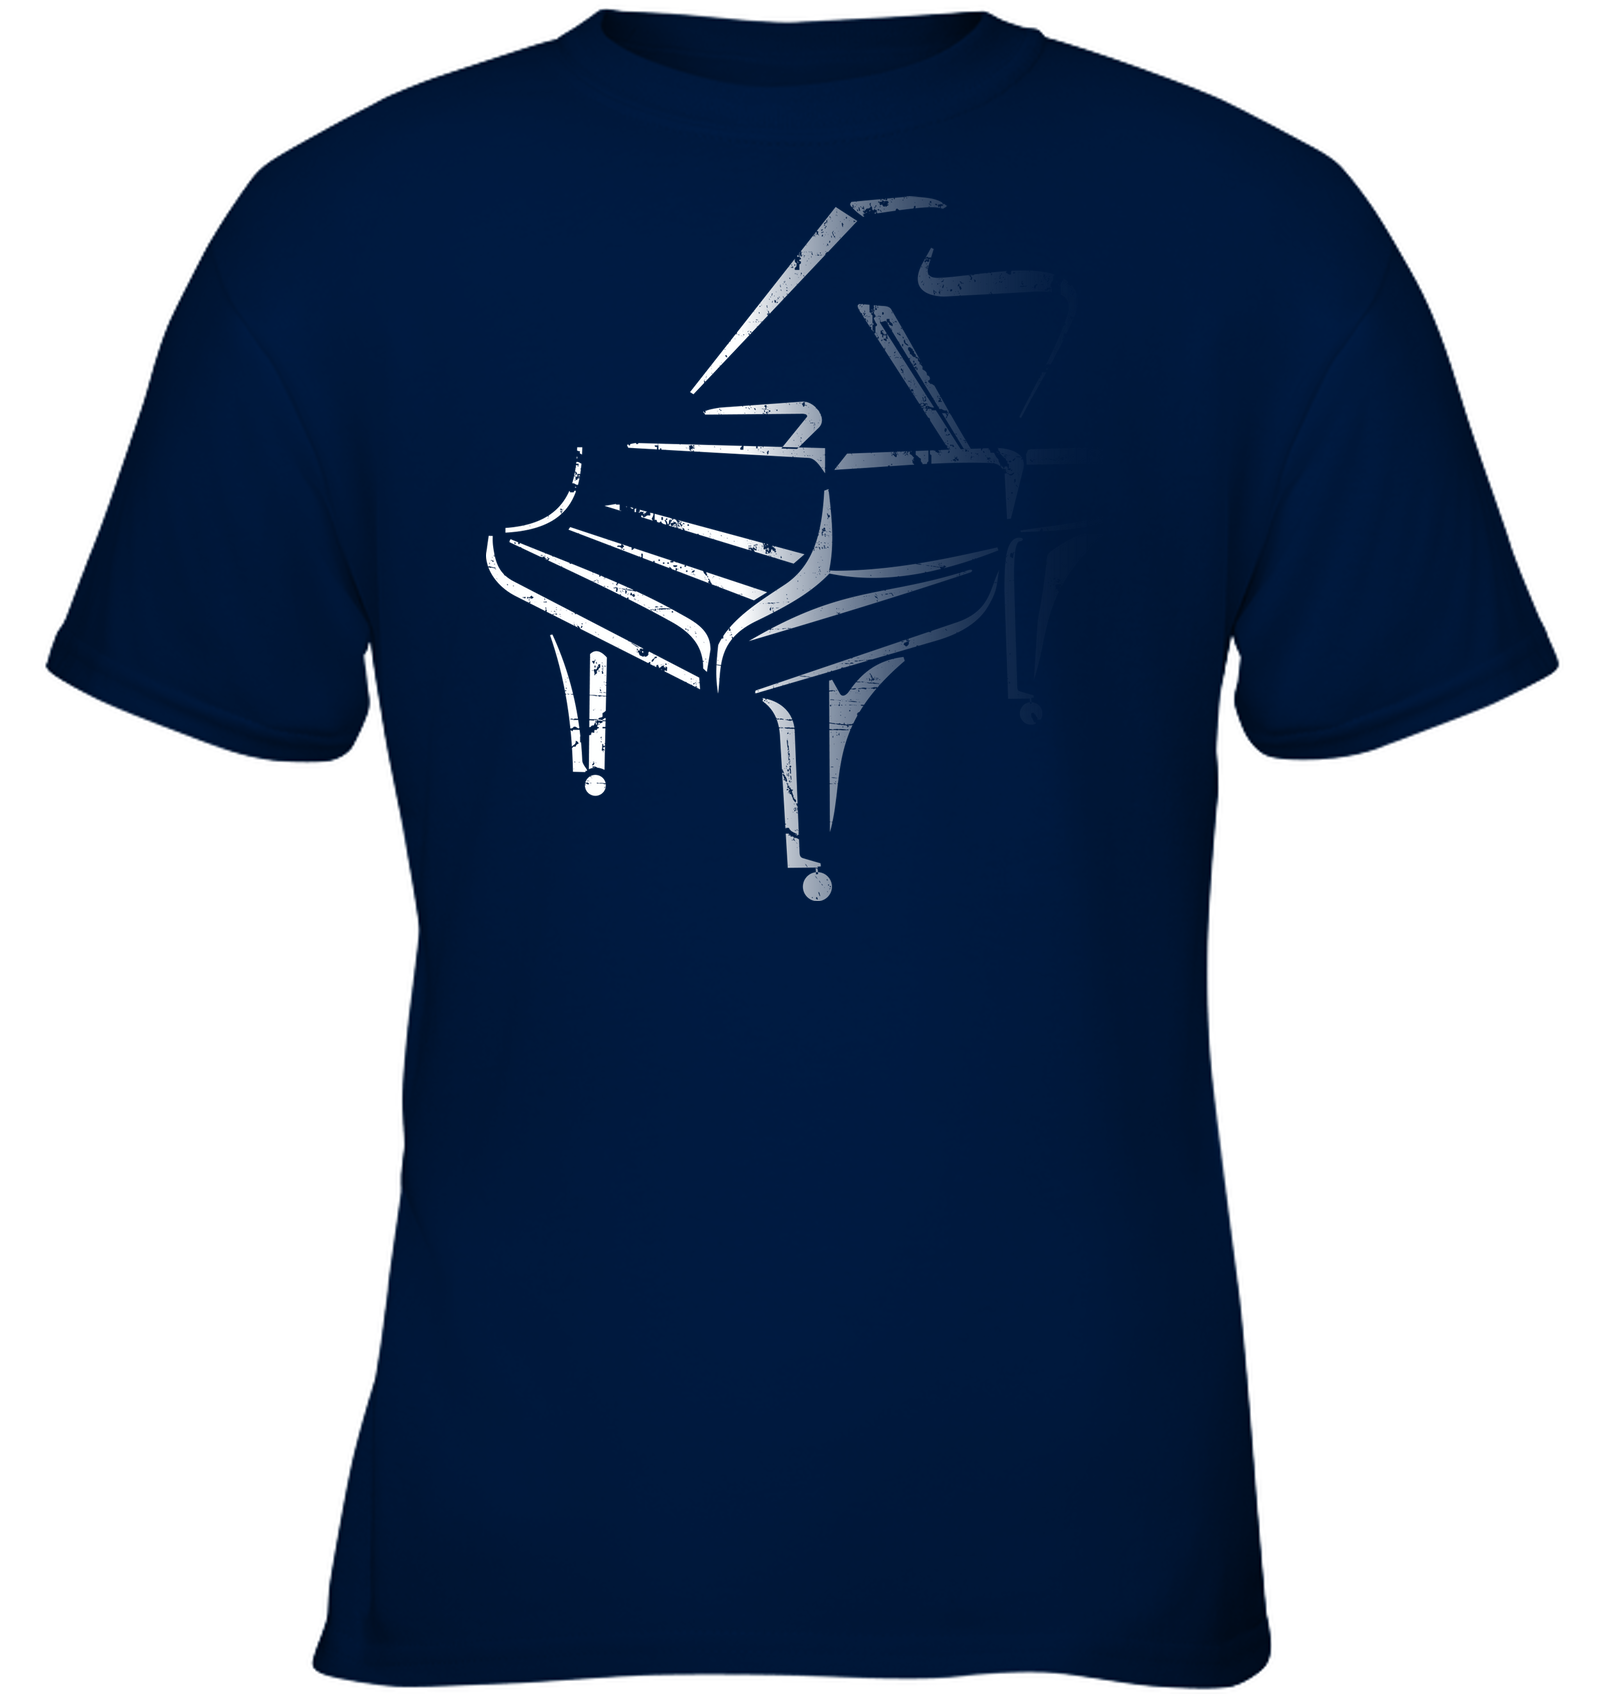 White Piano in the Shadows -  Gildan Youth Short Sleeve T-Shirt